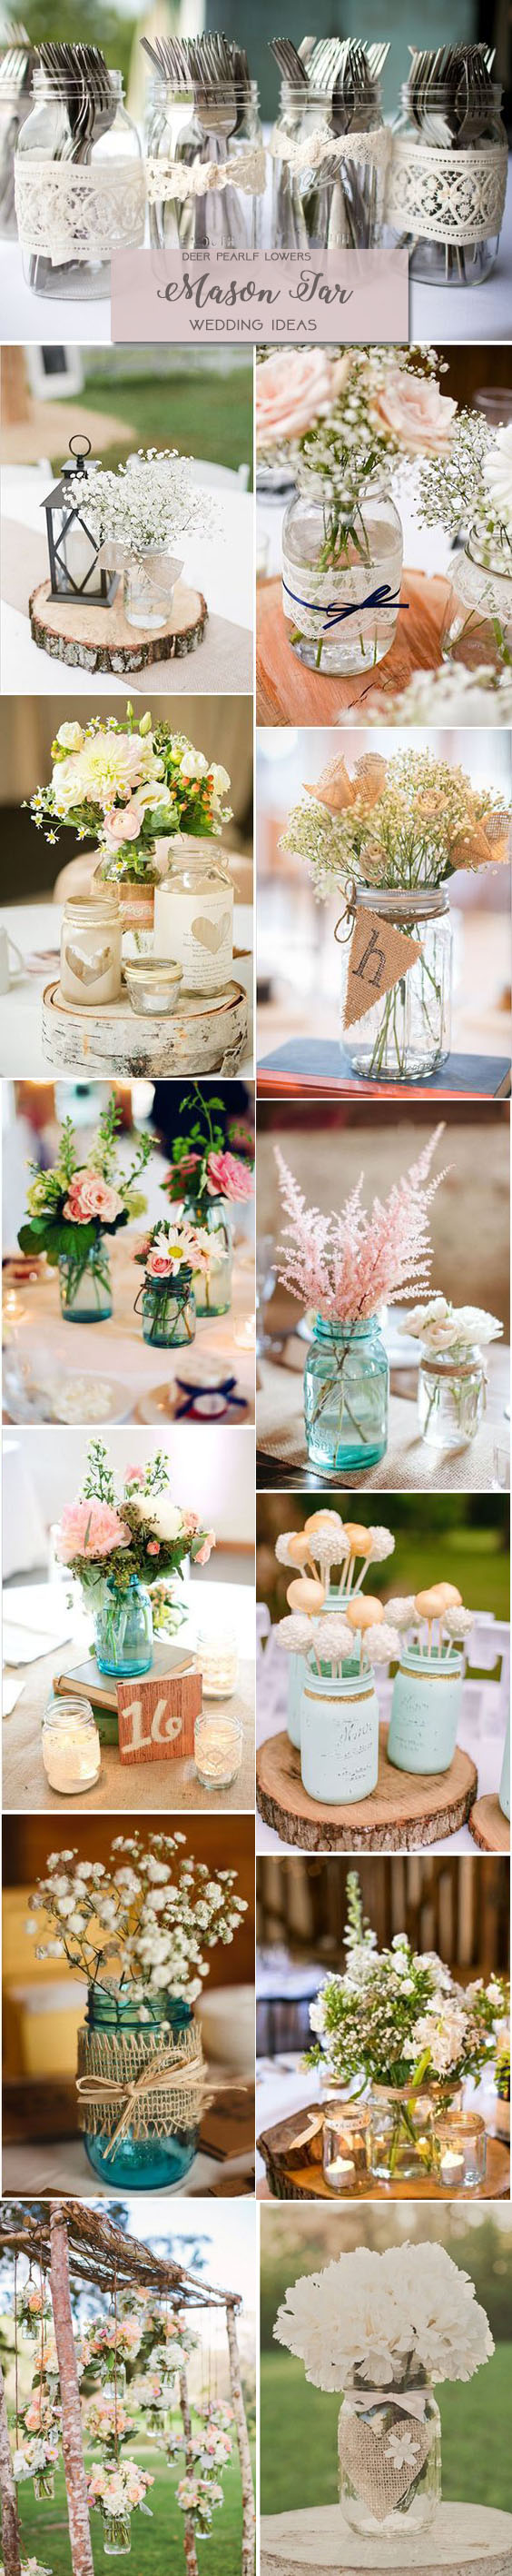 Rustic country wedding ideas - mason jar wedding centerpieces & decor